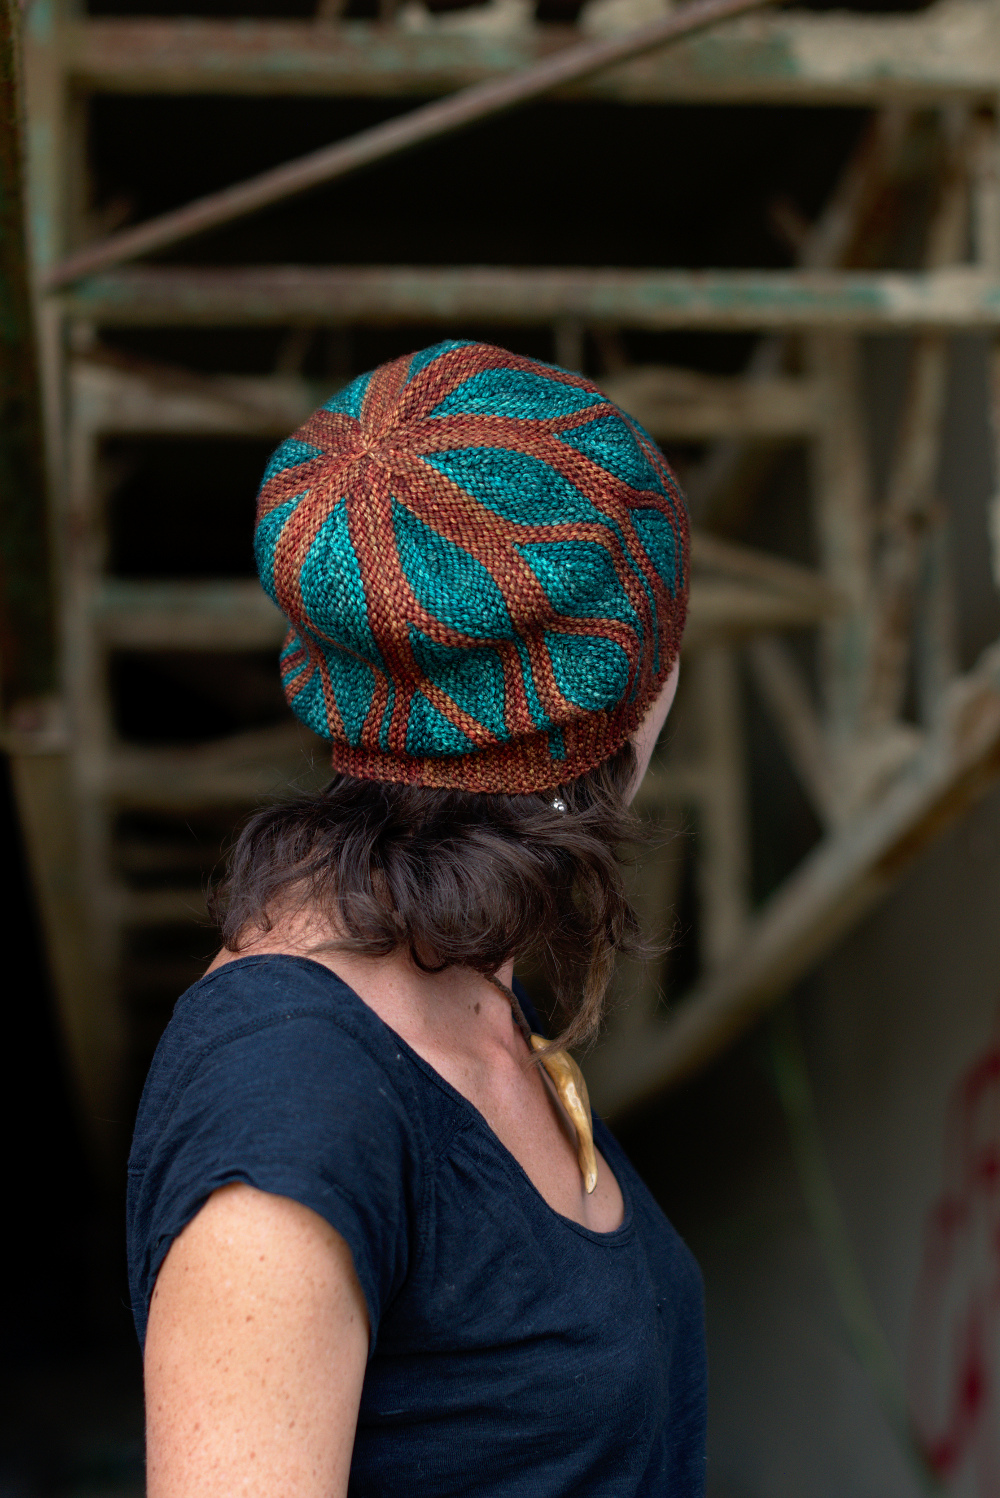 Toph sideways knit short row colourwork hat knitting pattern